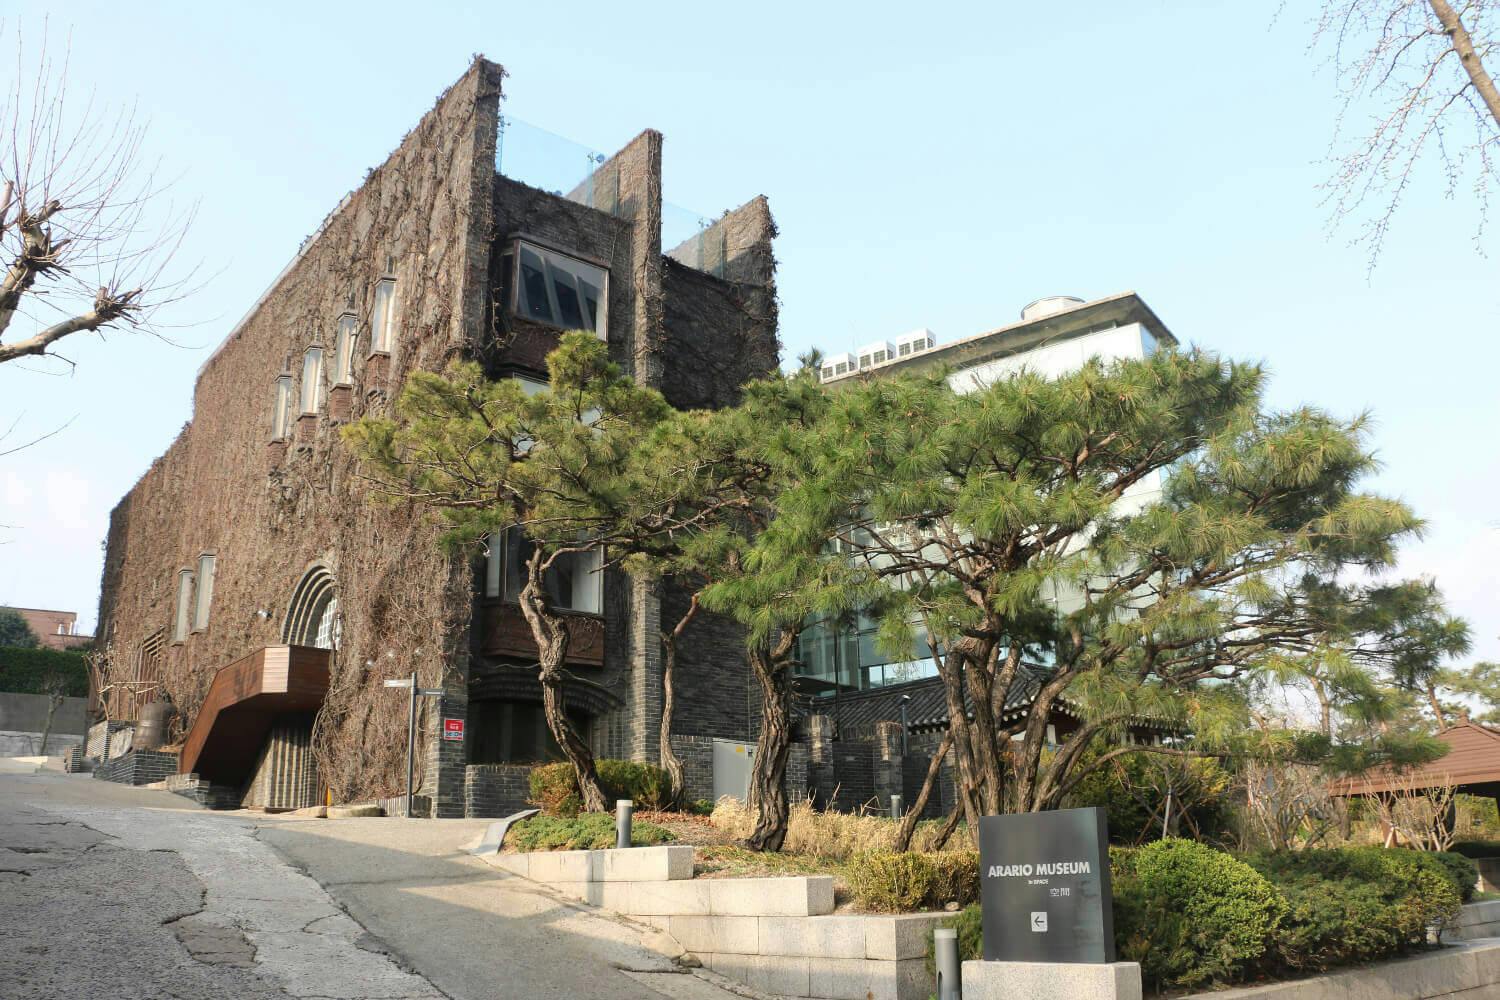 The exterior of Arario Museum in Seoul | Photo courtesy of myartguides.com